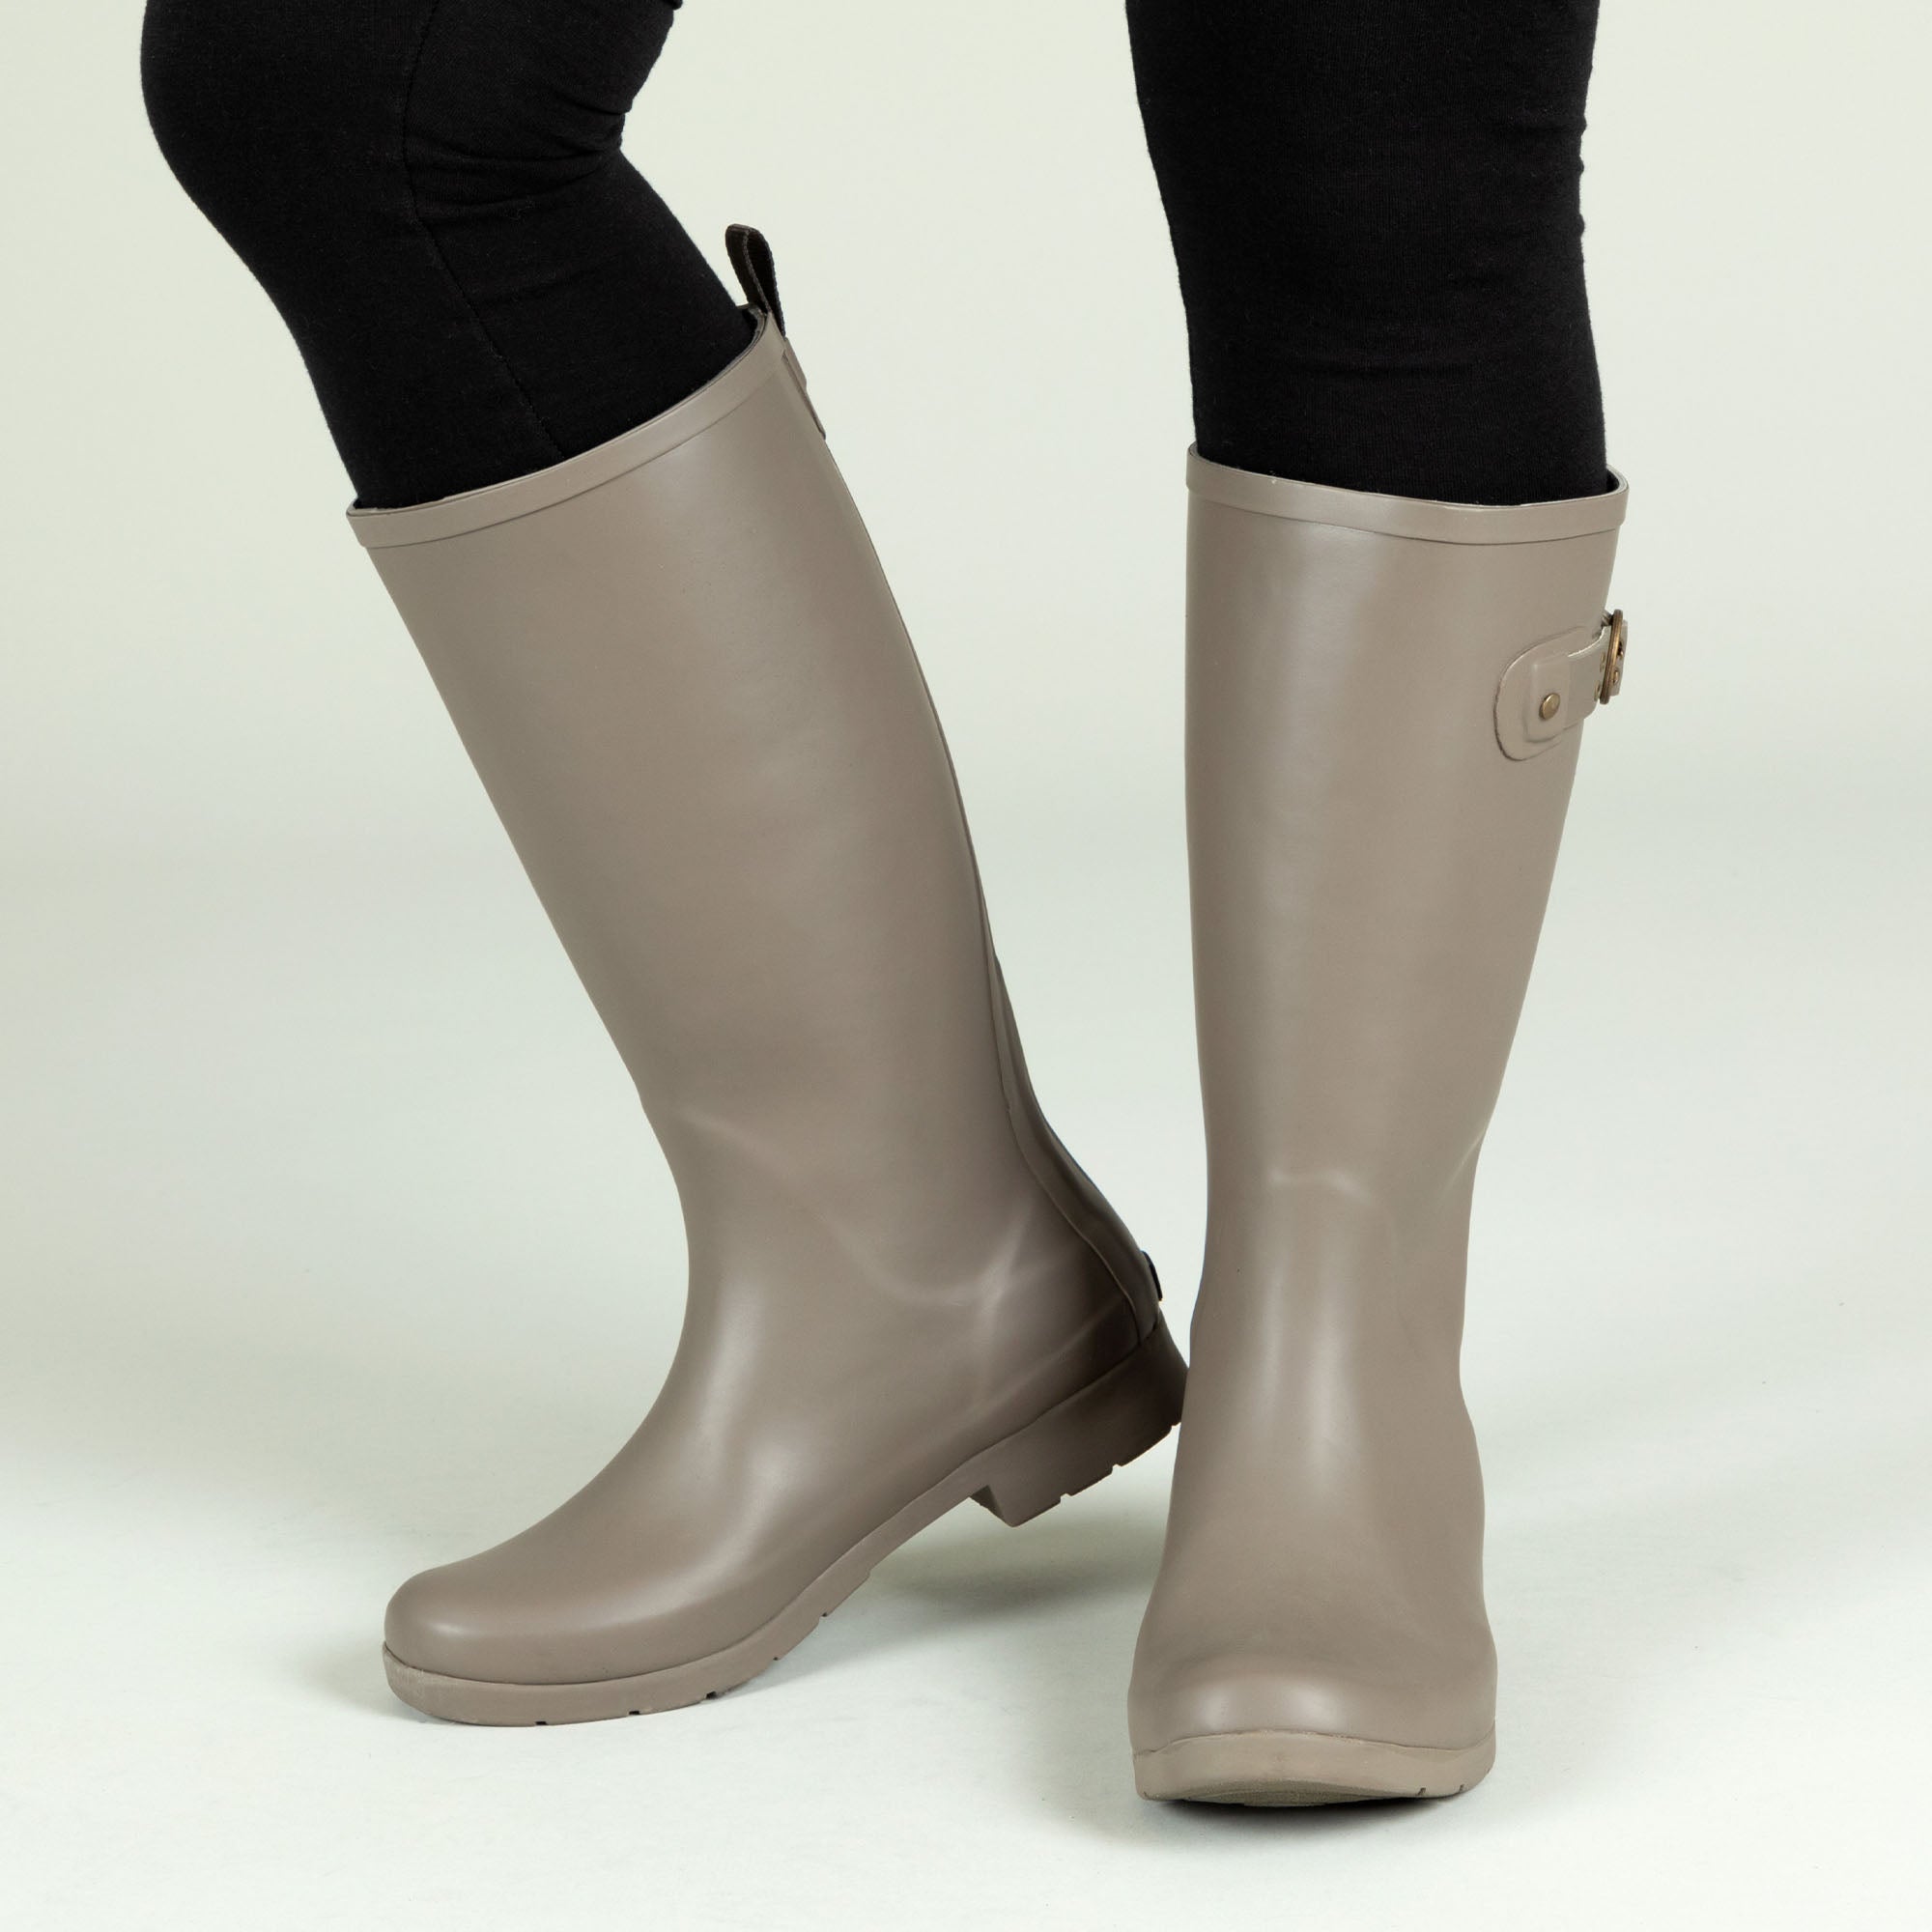 Eastlake Classic Tall Rain Boots - Taupe - 7